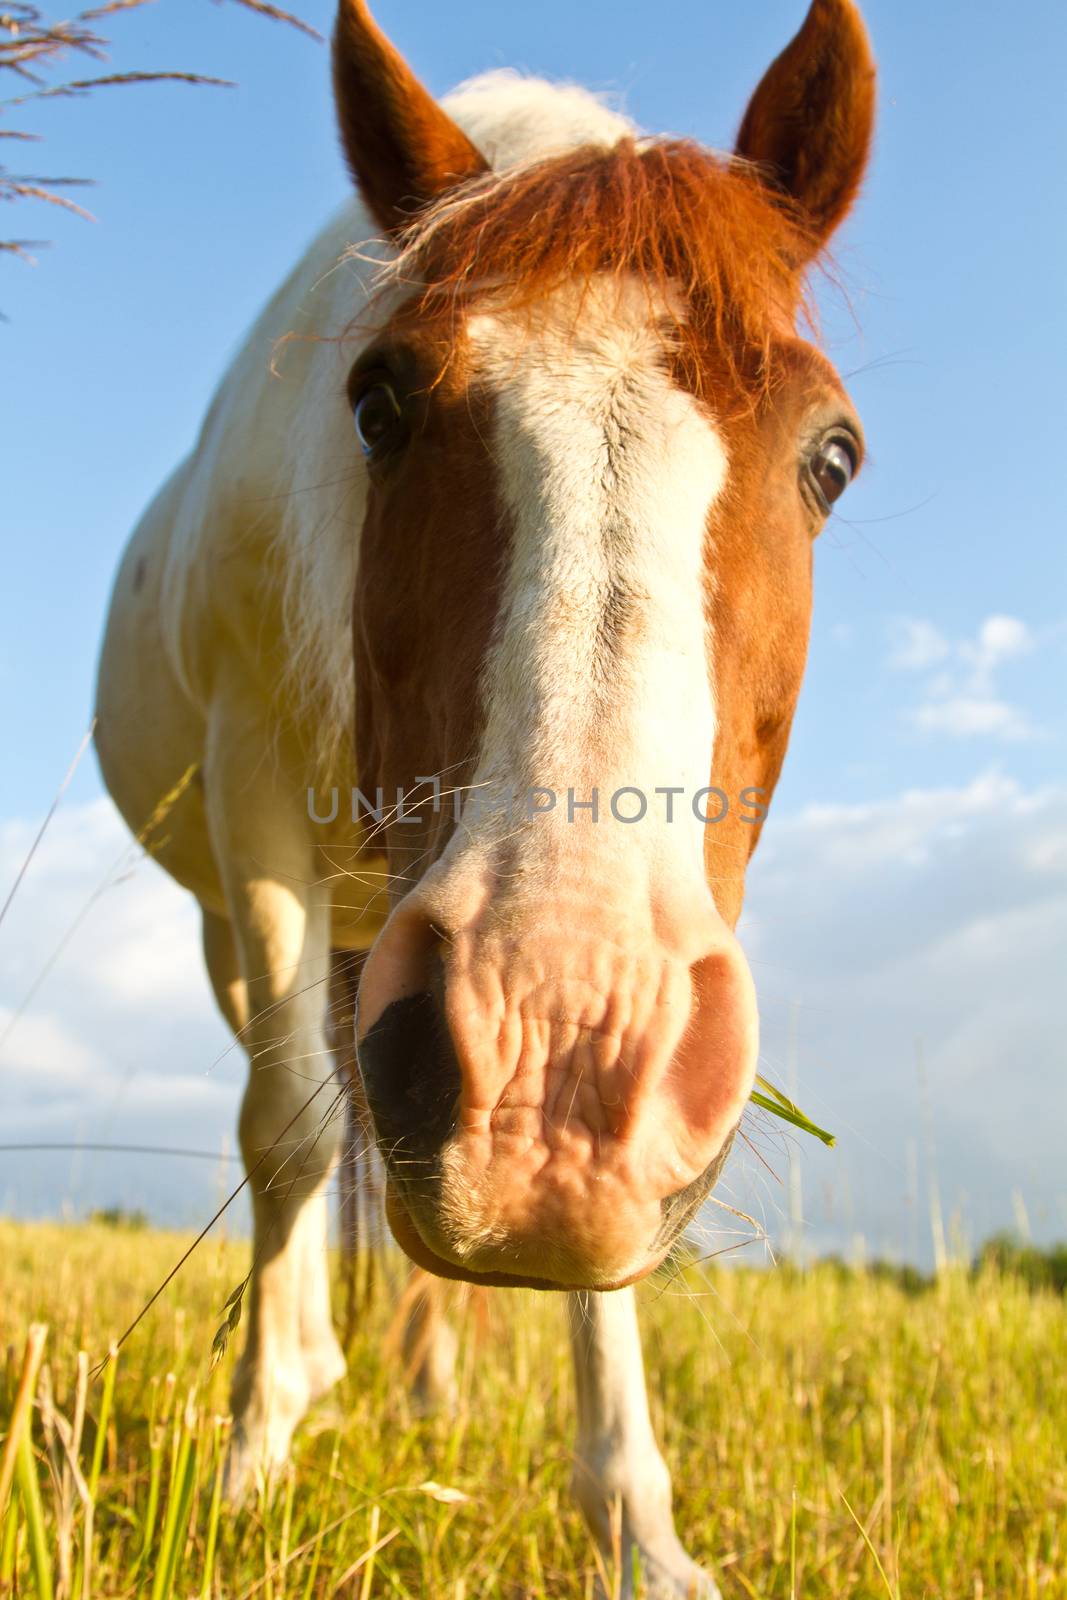 Horse on a field in the summer in denmark